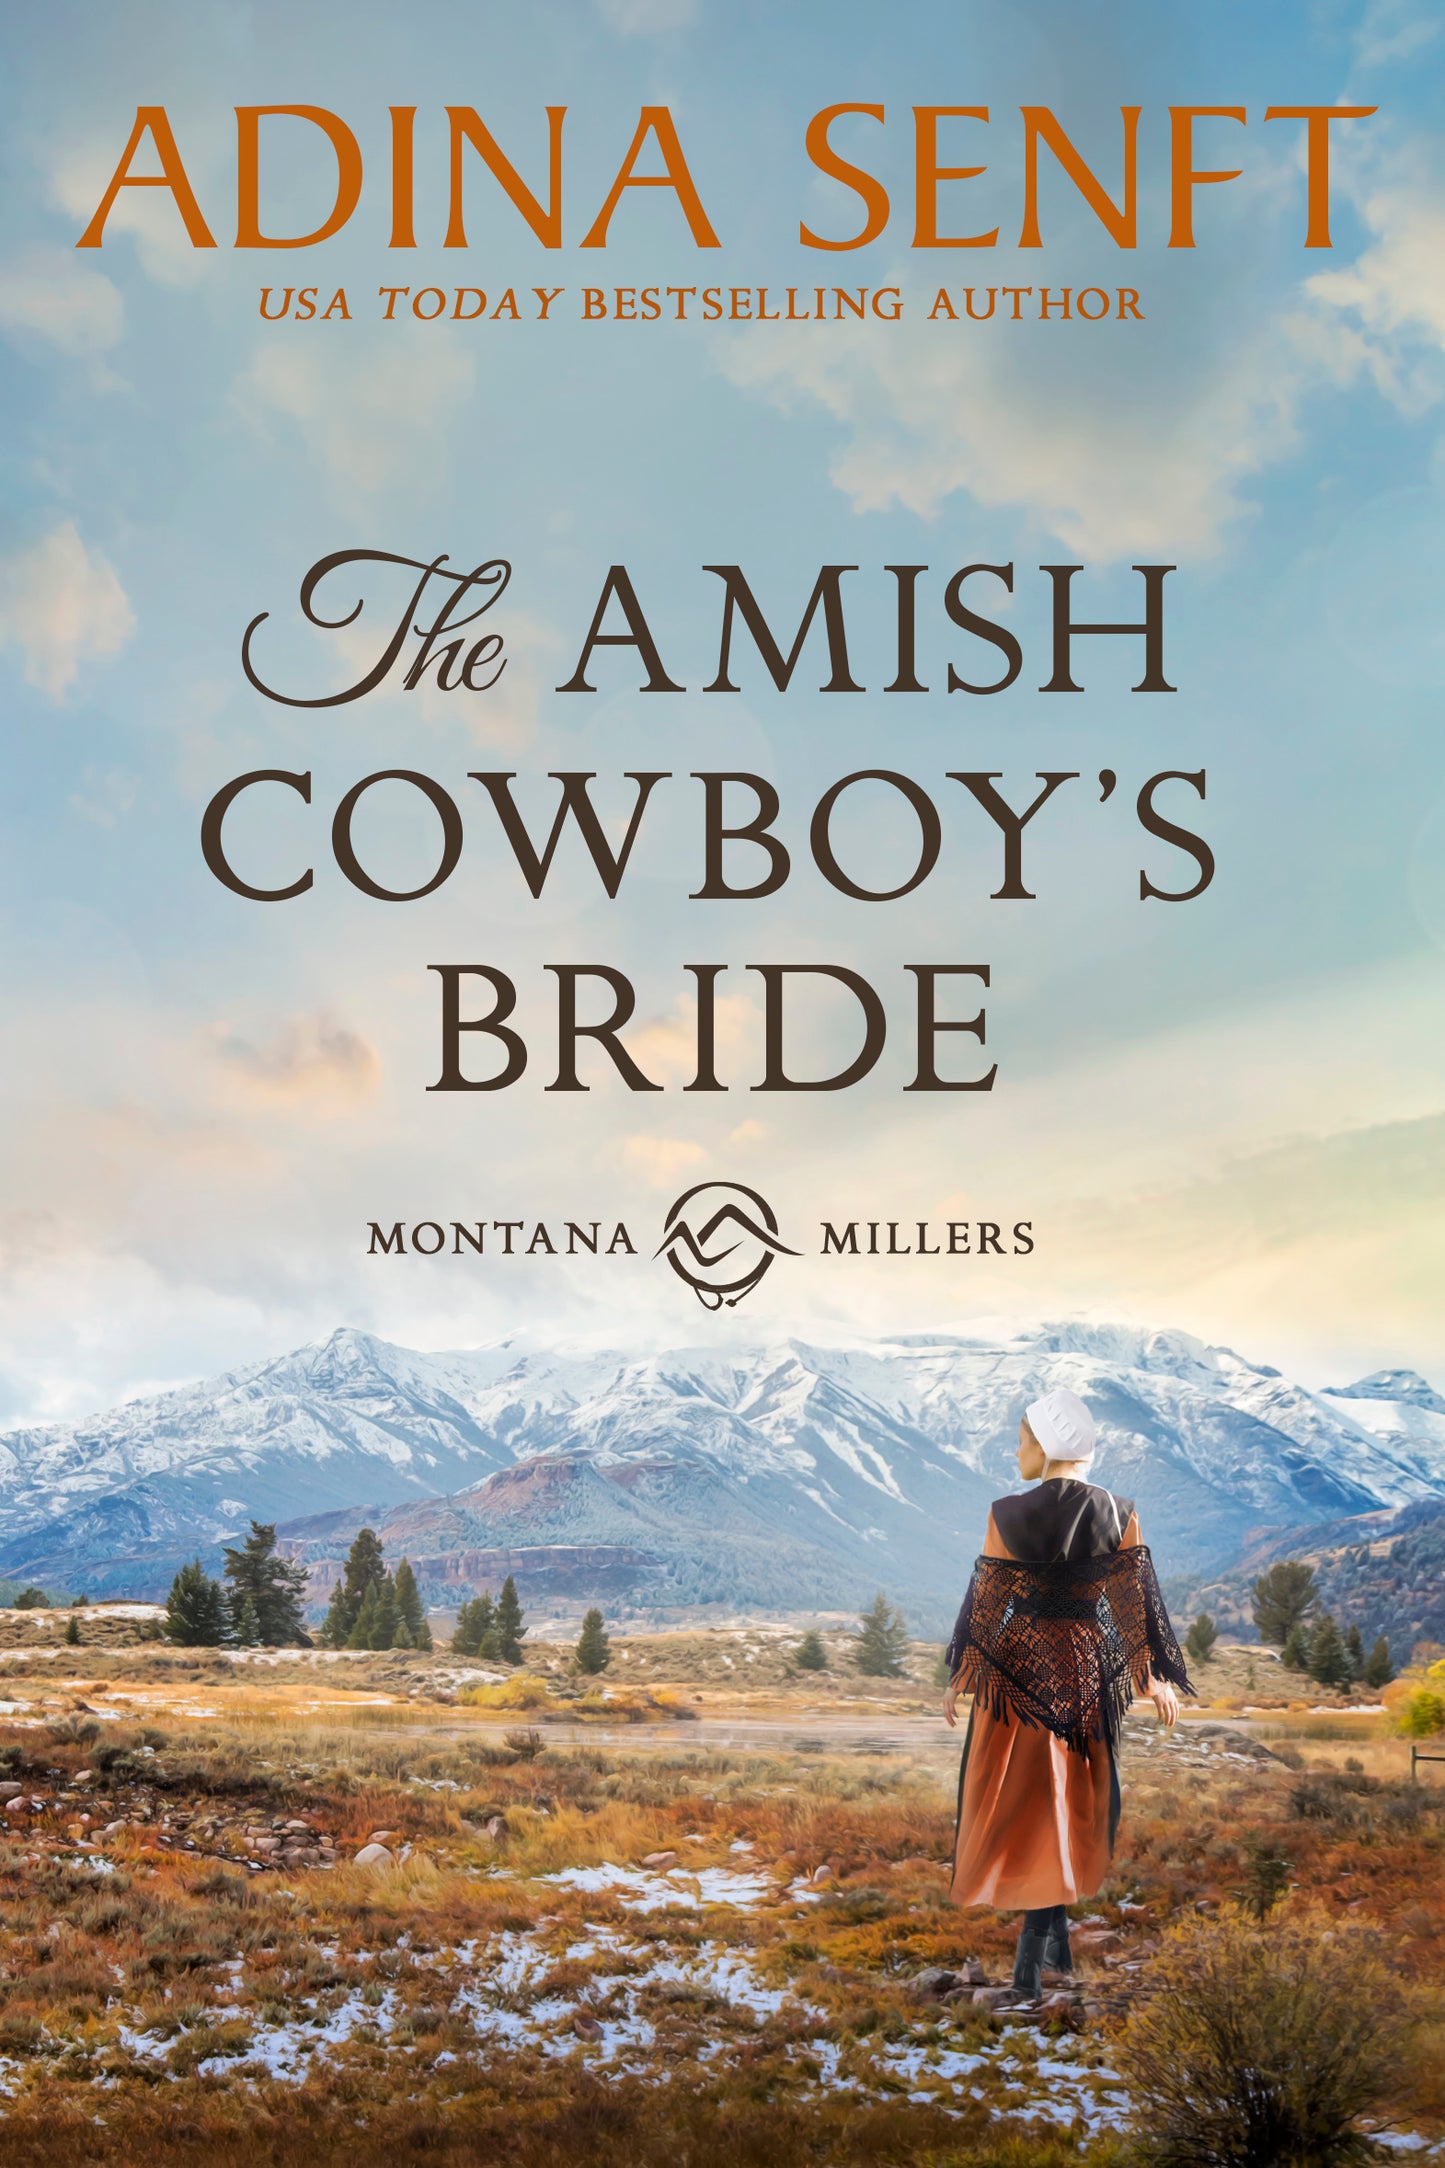 The Amish Cowboy's Bride by Adina Senft, an Amish romance novel set in Montana